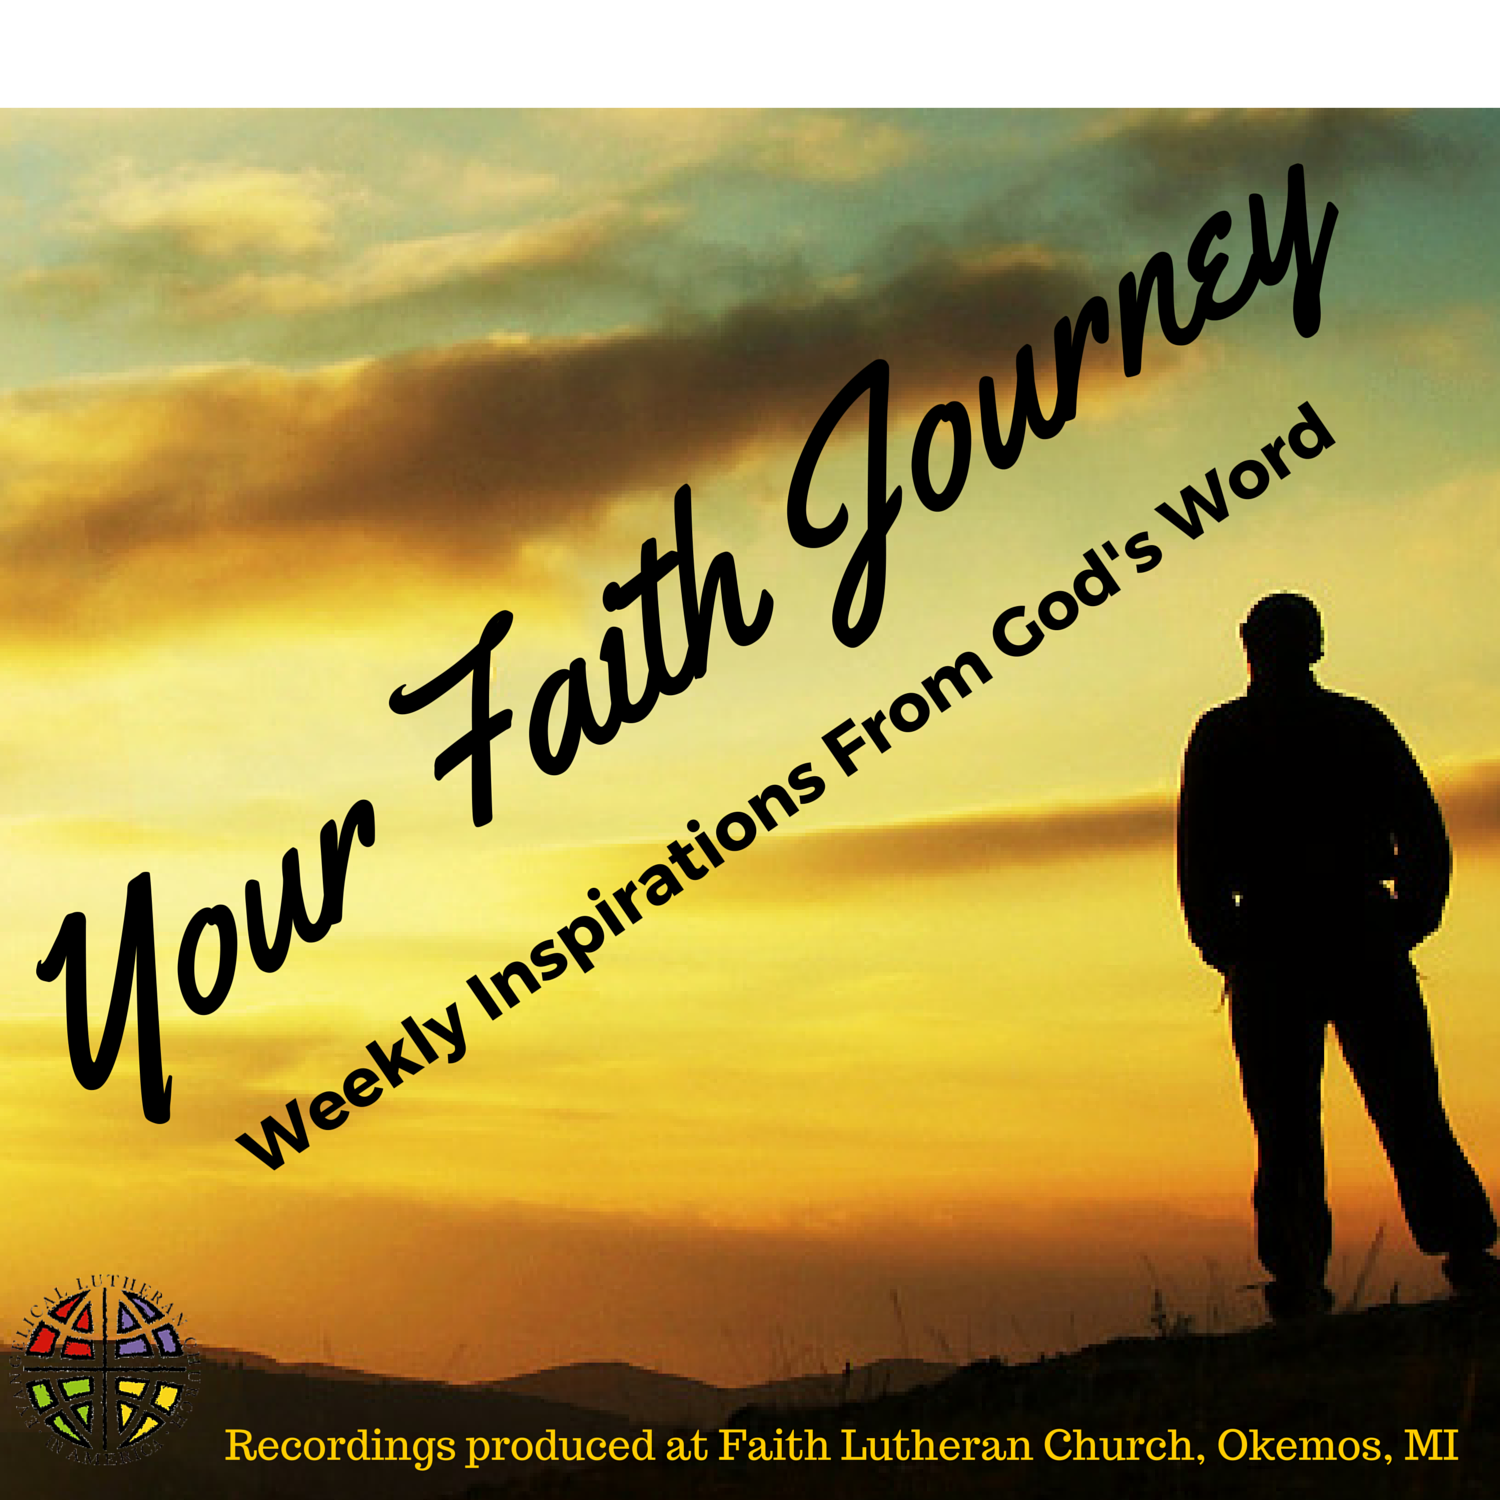 my journey of faith and hope